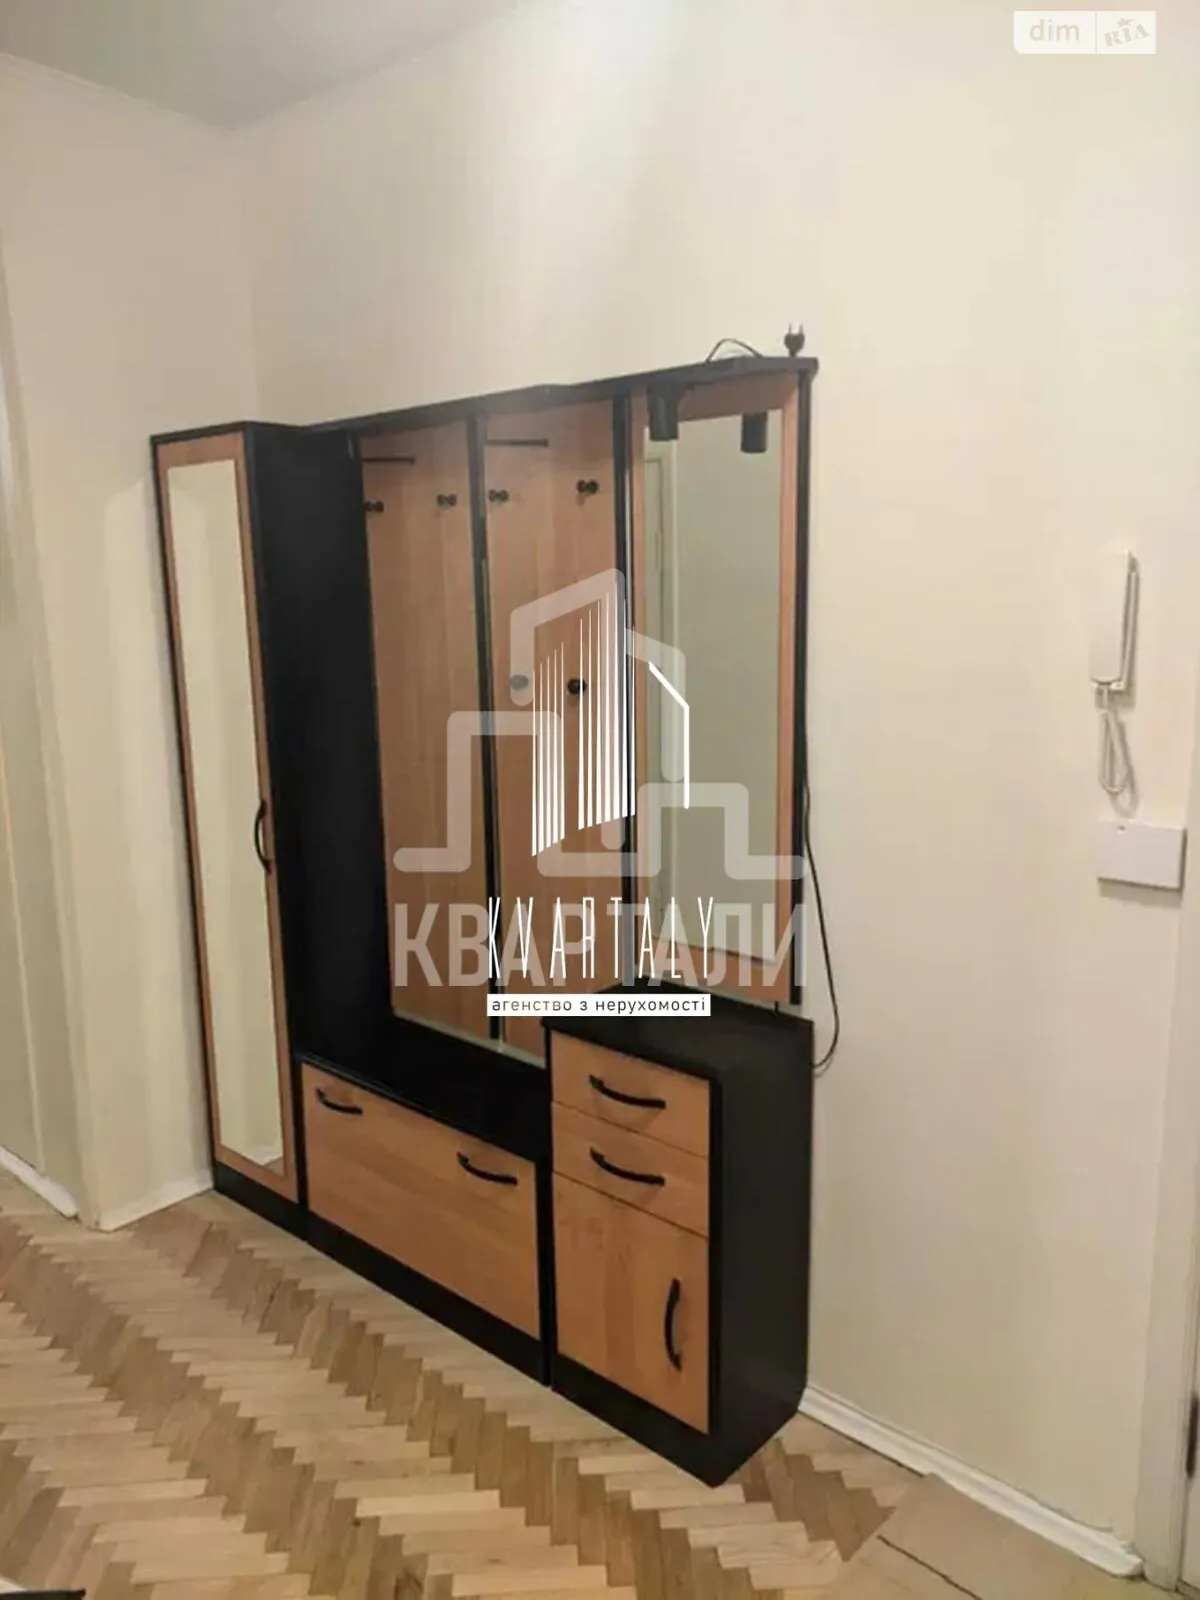 Сдается в аренду 3-комнатная квартира 83 кв. м в Киеве, ул. Петра Болбочана, 4А - фото 1